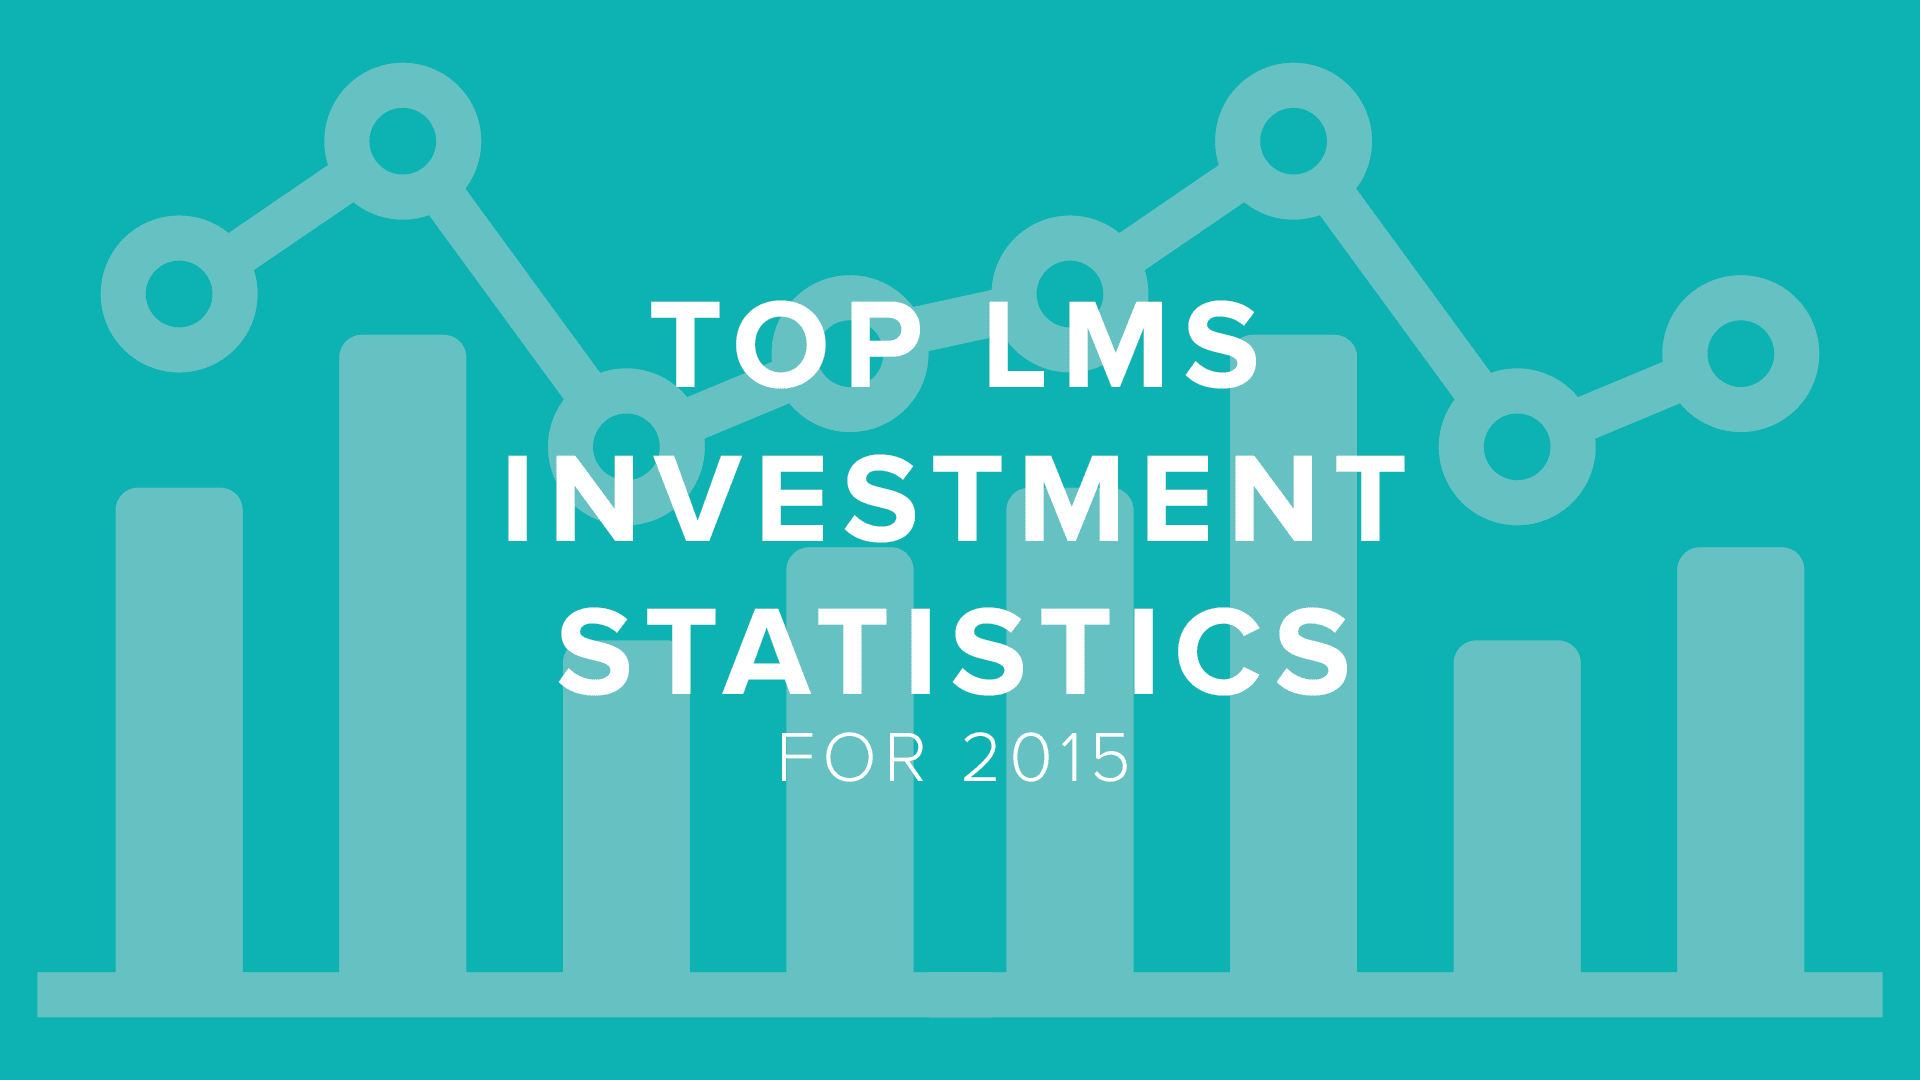 DigitalChalk: Top LMS Investment Statistics for 2015